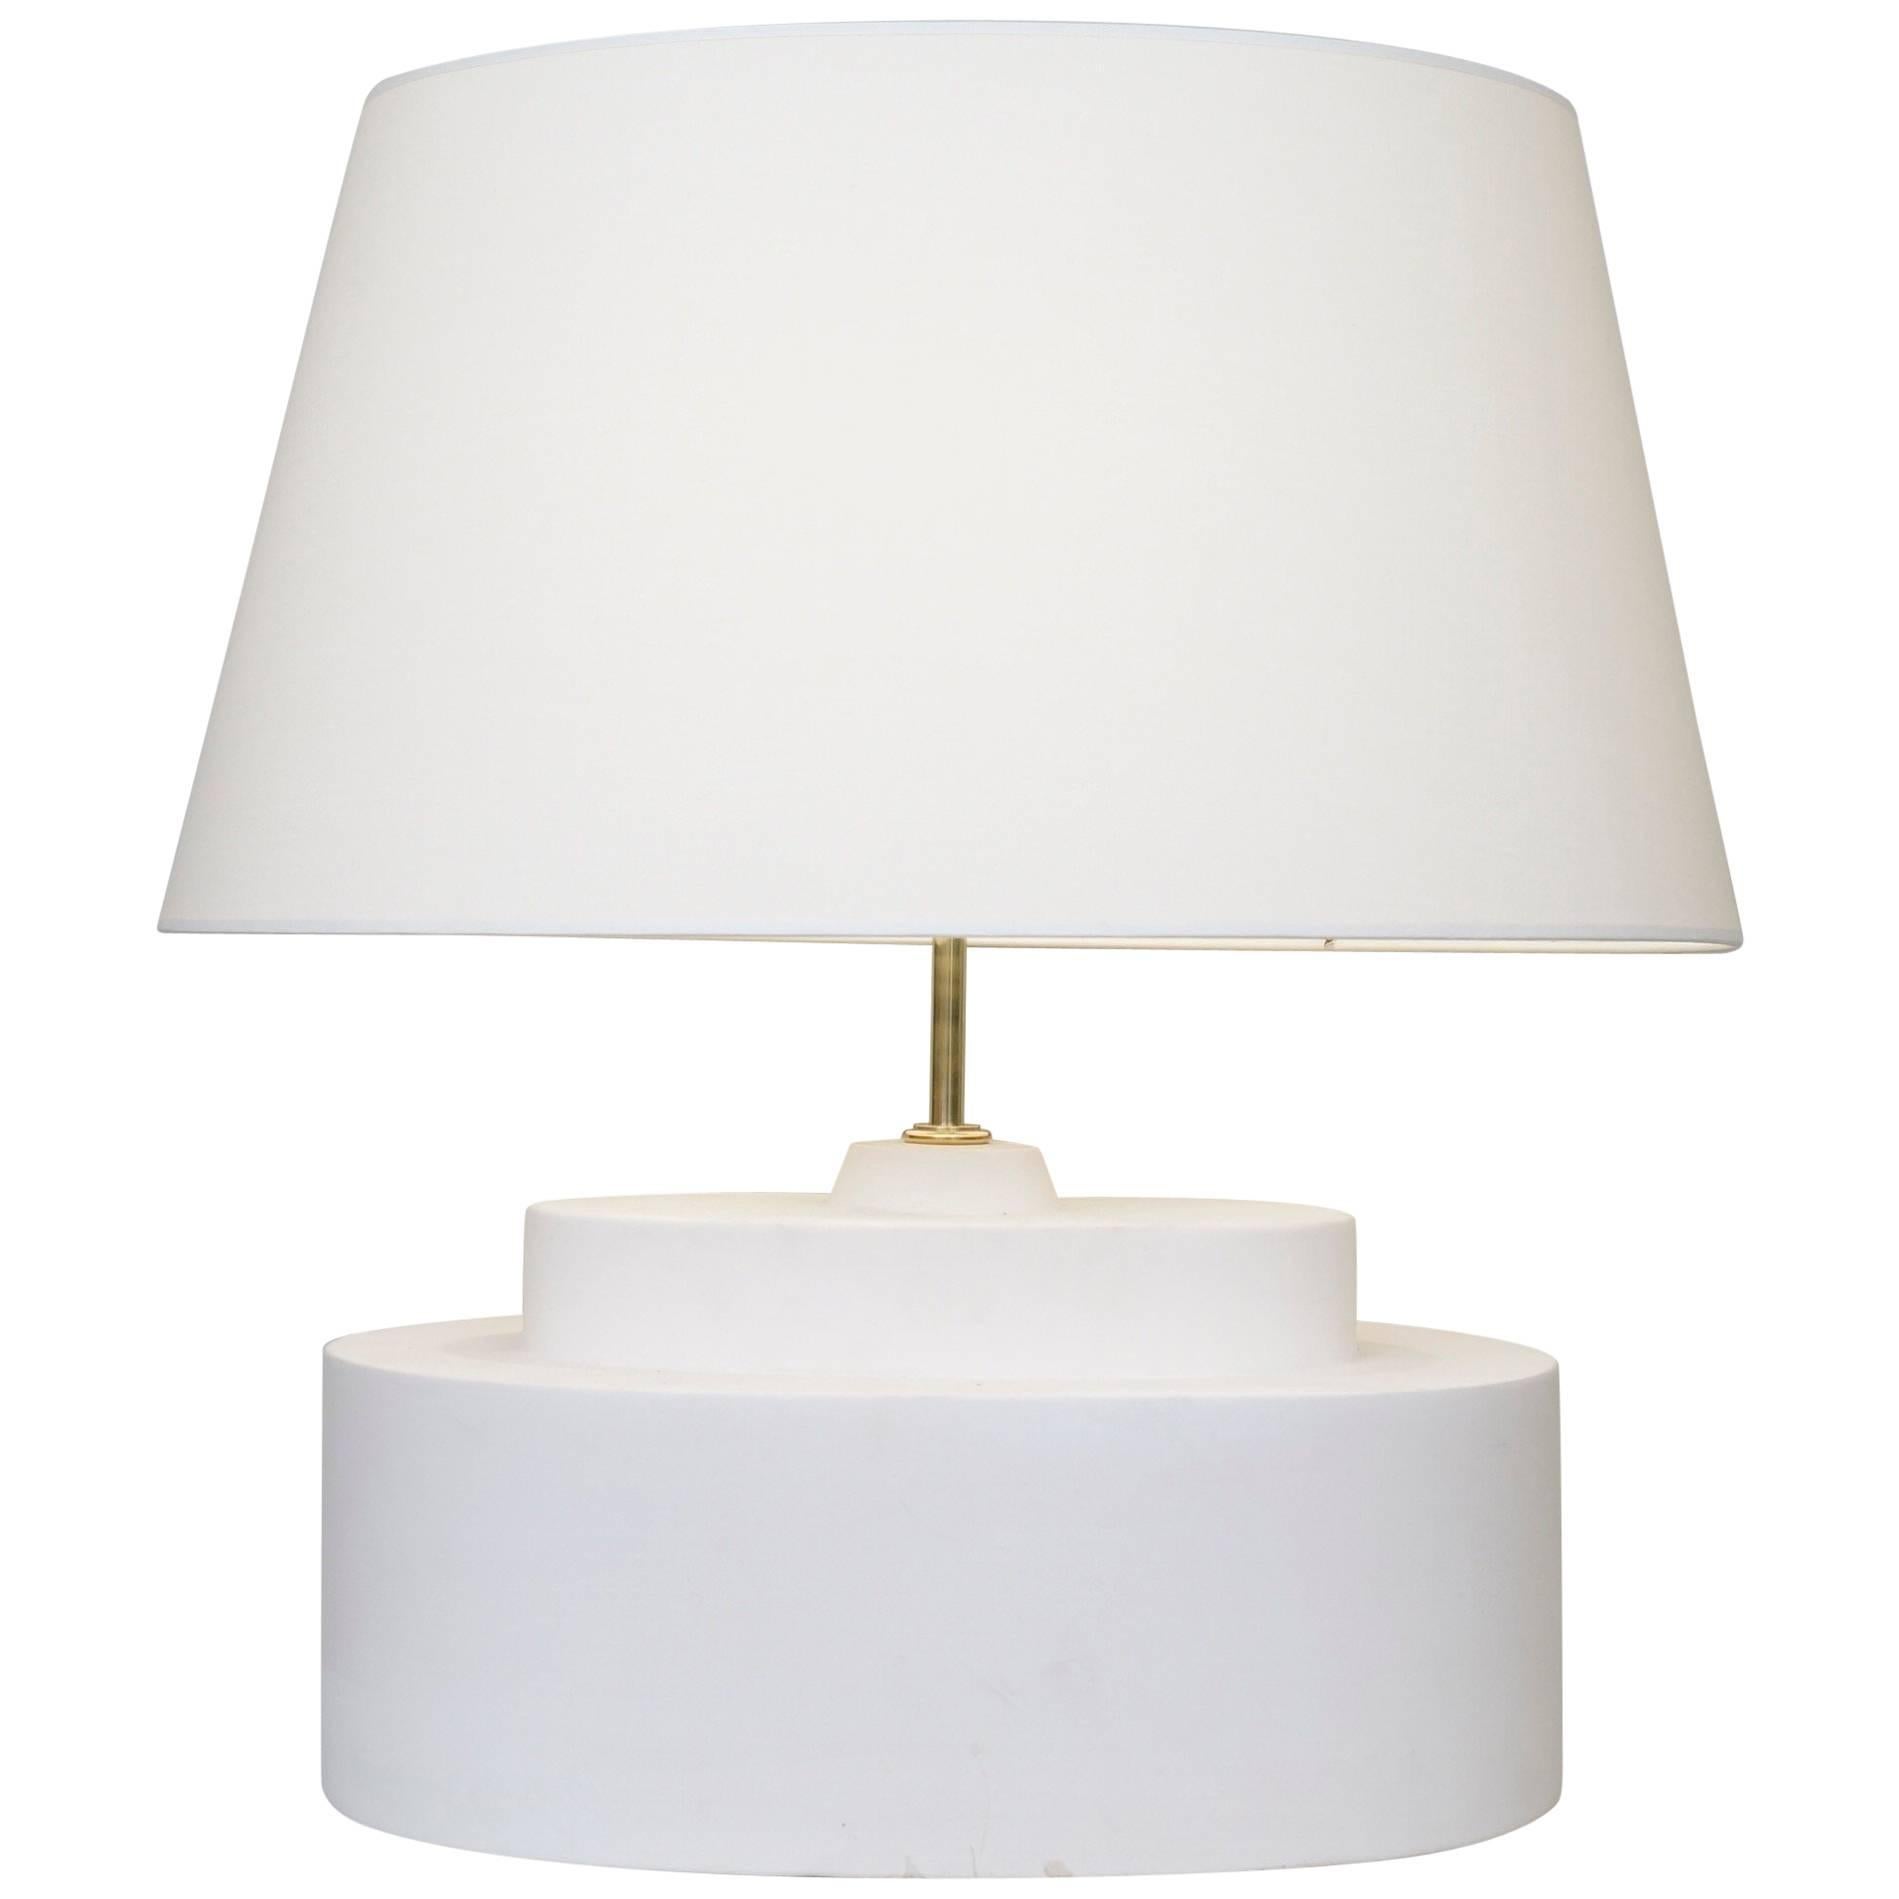 Late 20th Century White Un-Enamelled Ceramic Table Lamp